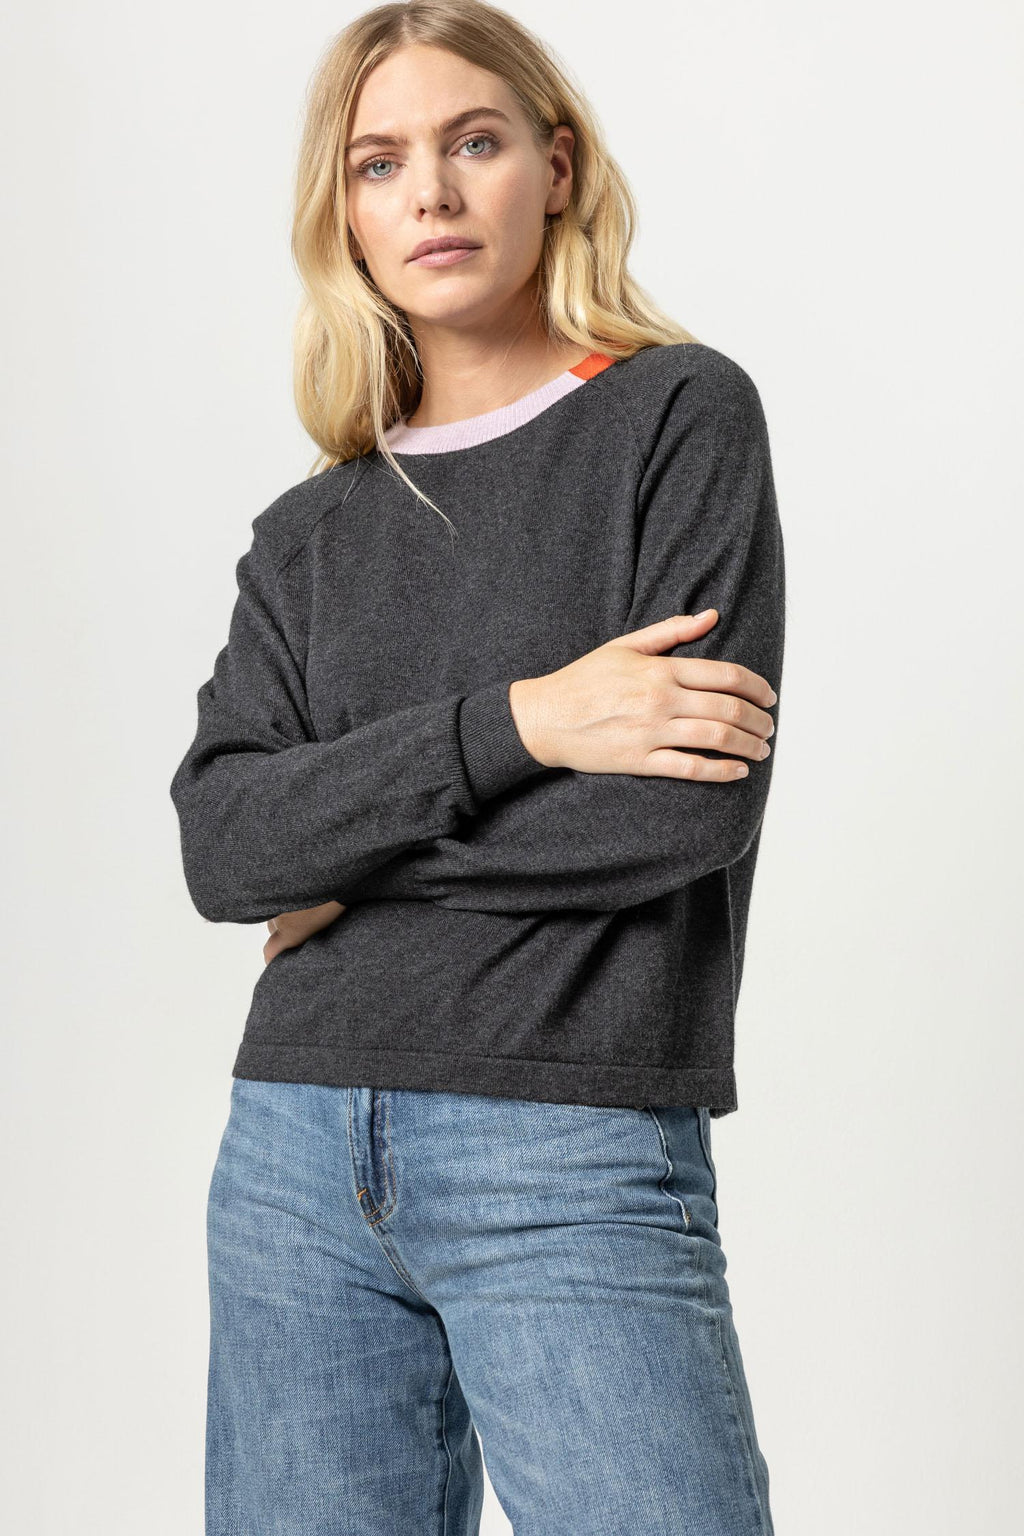 Sweaters Page – – 2 Julep Mint